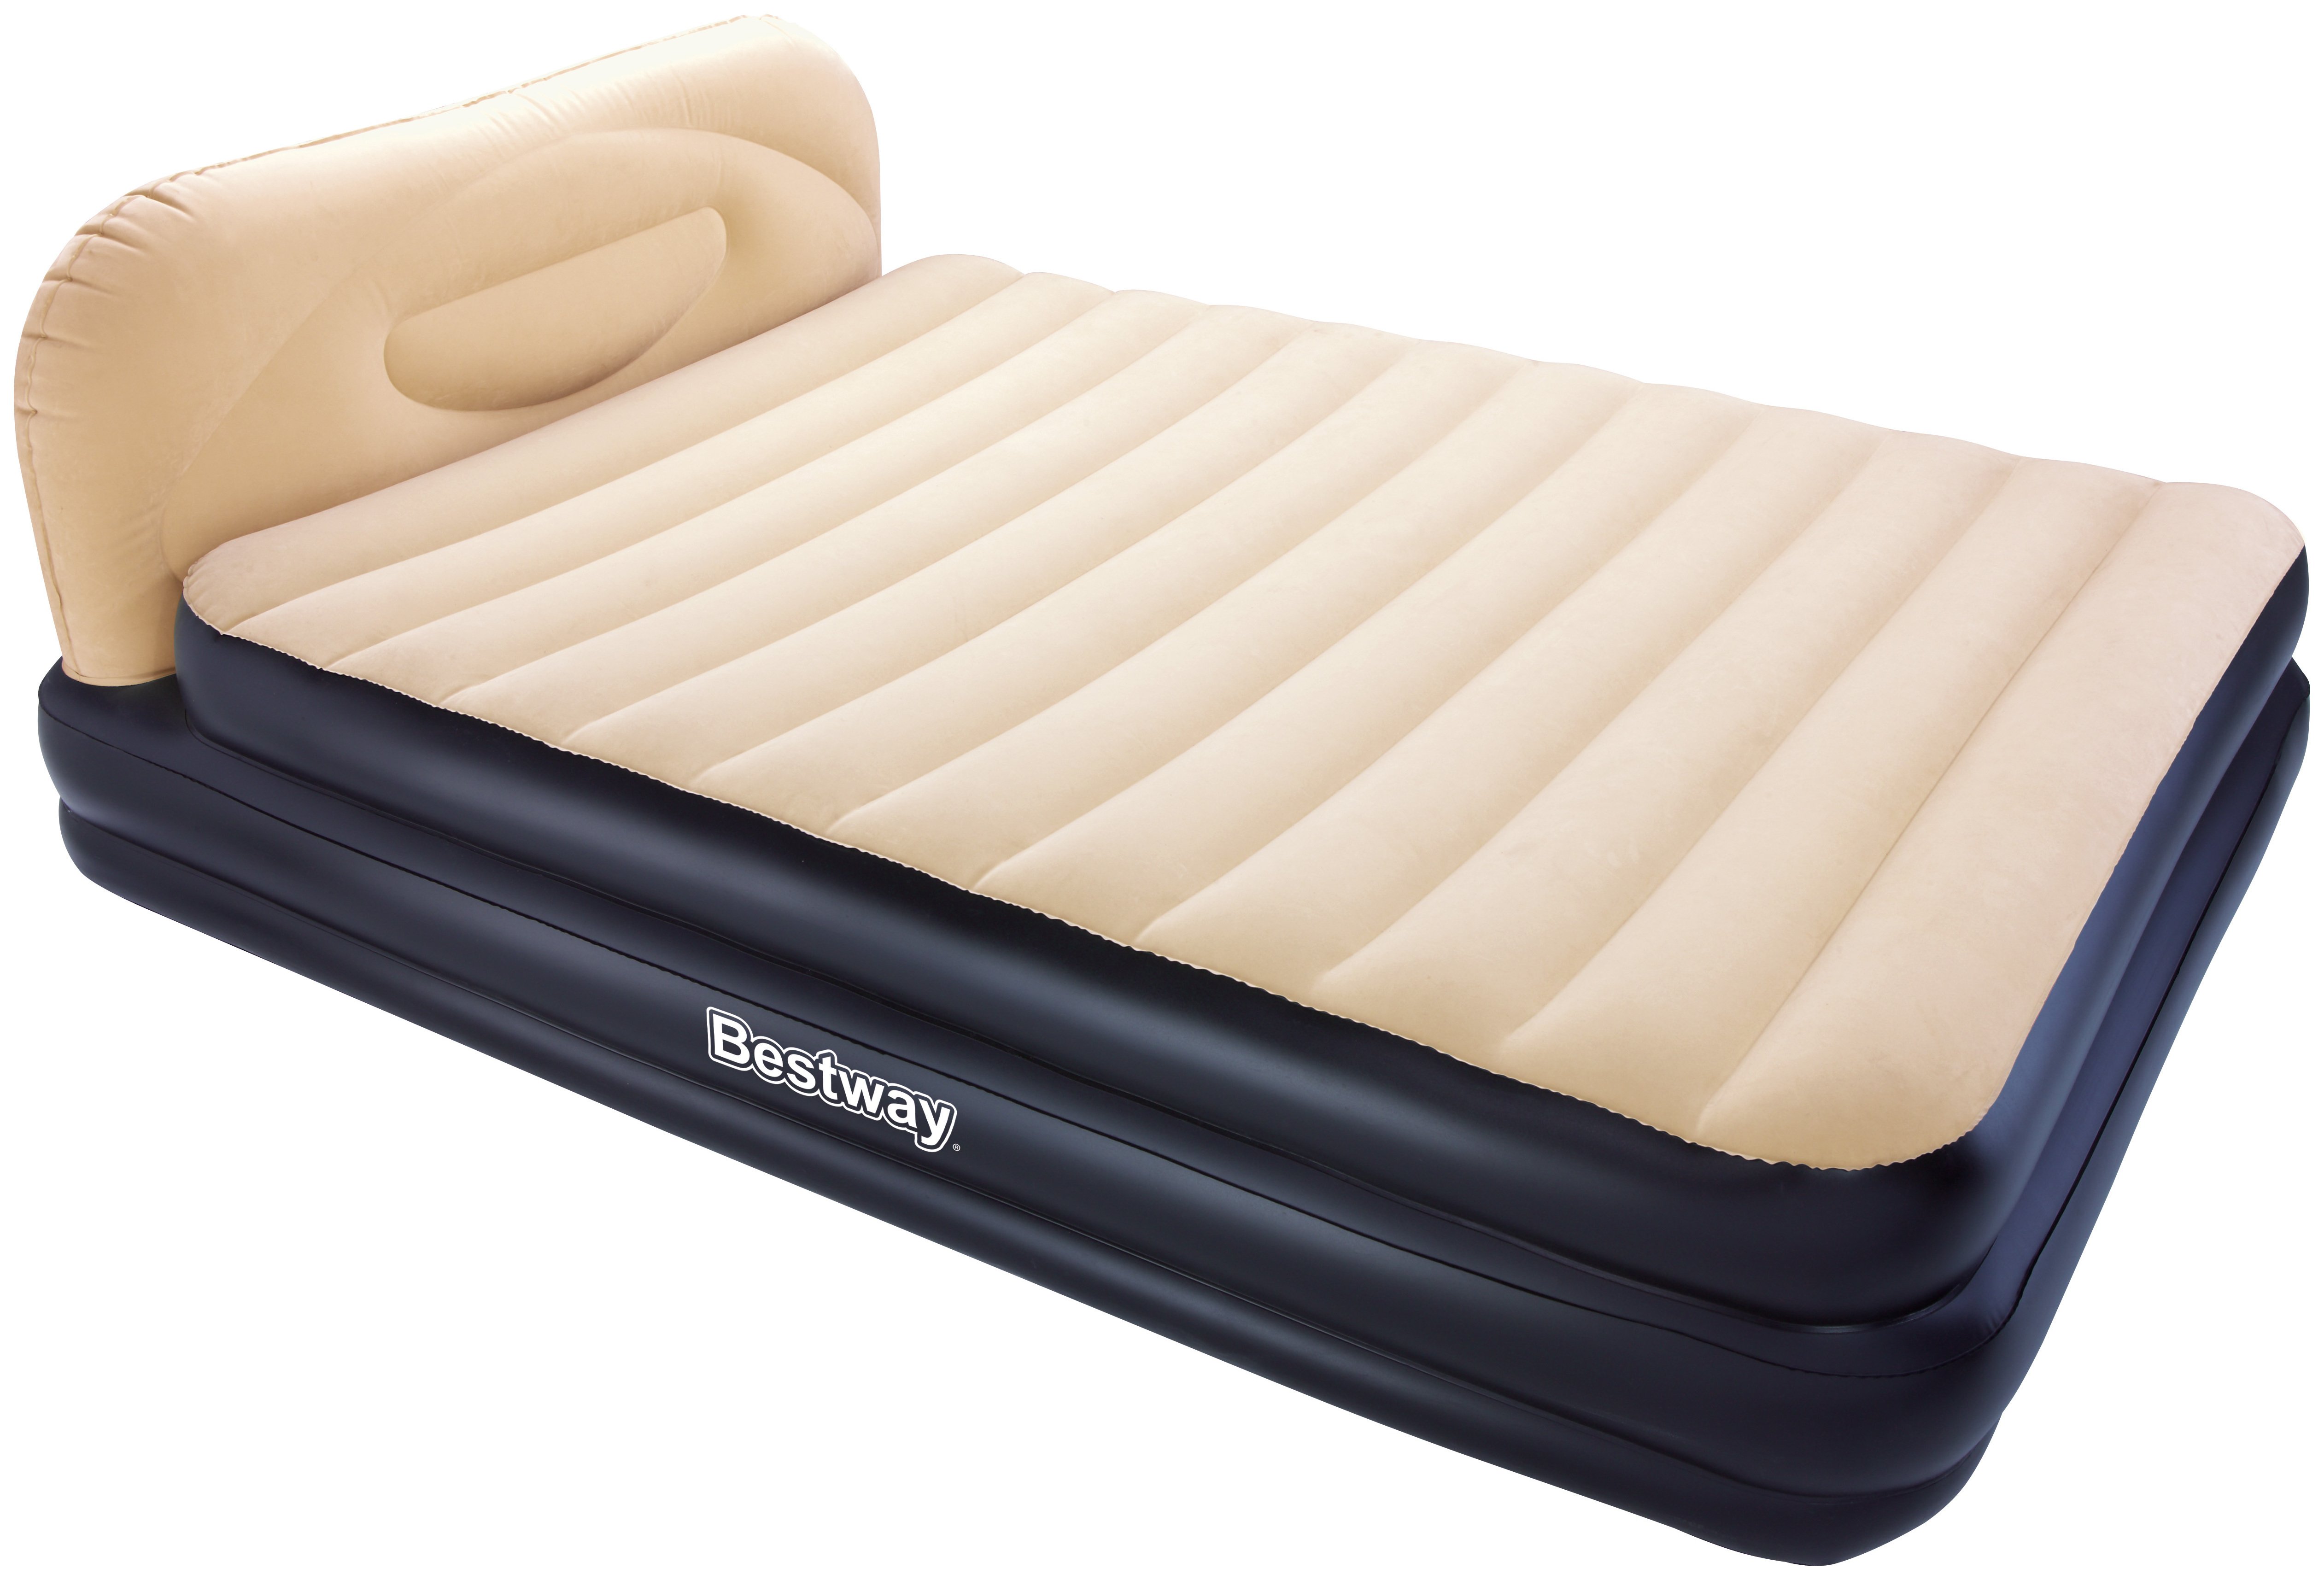 air bed mattress price